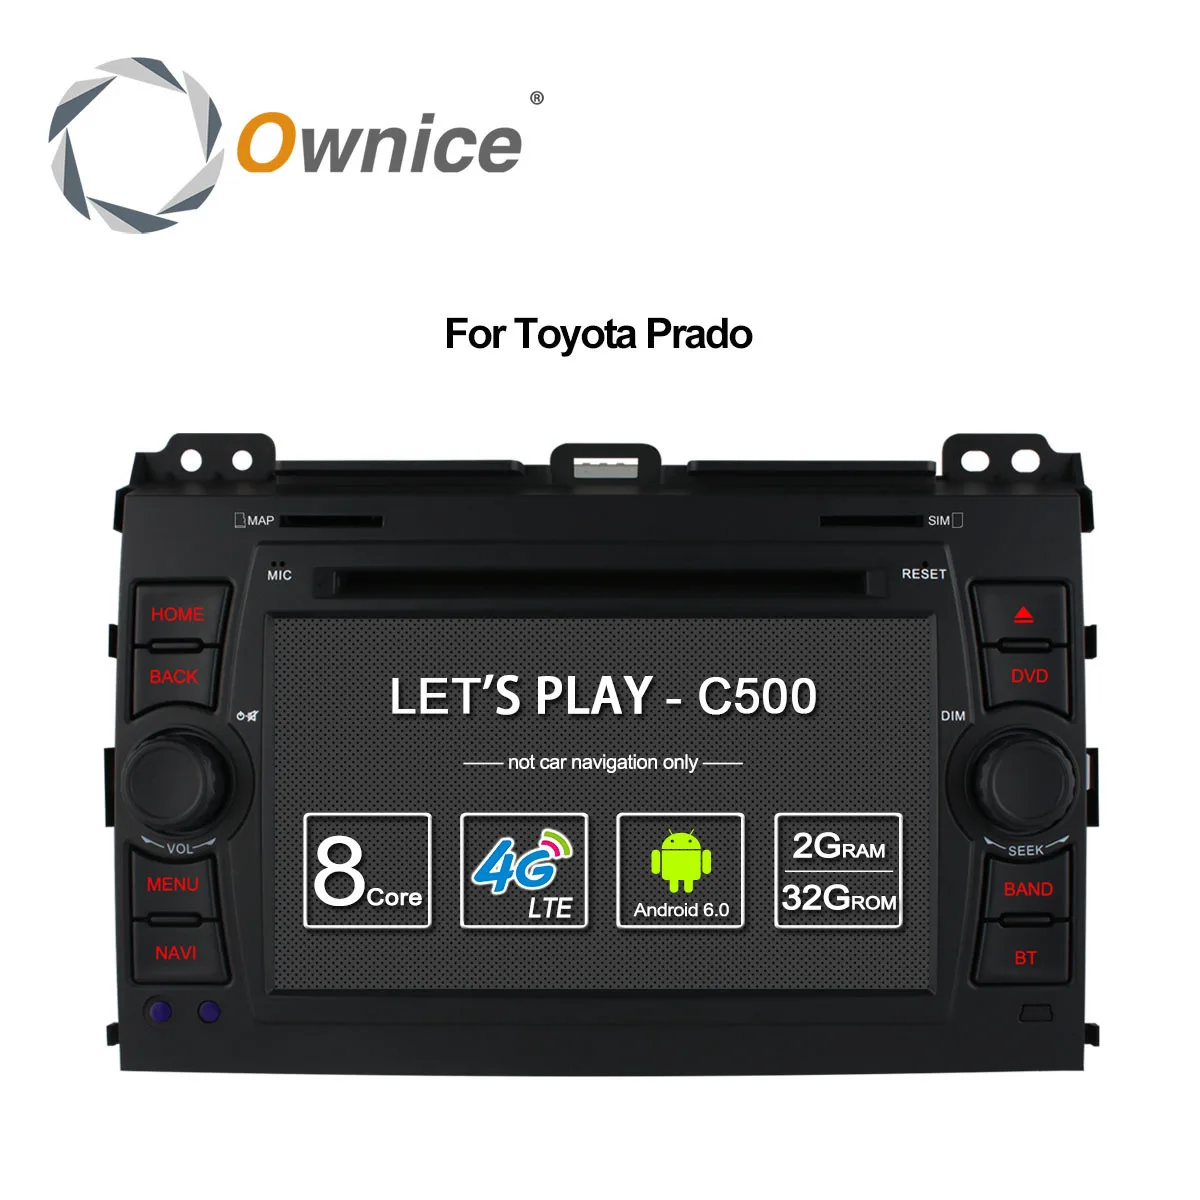 Perfect Ownice C500 4G LTE SIM Octa 8 Core Android 6.0 Car DVD Player for Toyota Land Cruiser Prado 120 2002-2009 GPS Navi Radio 32G ROM 0